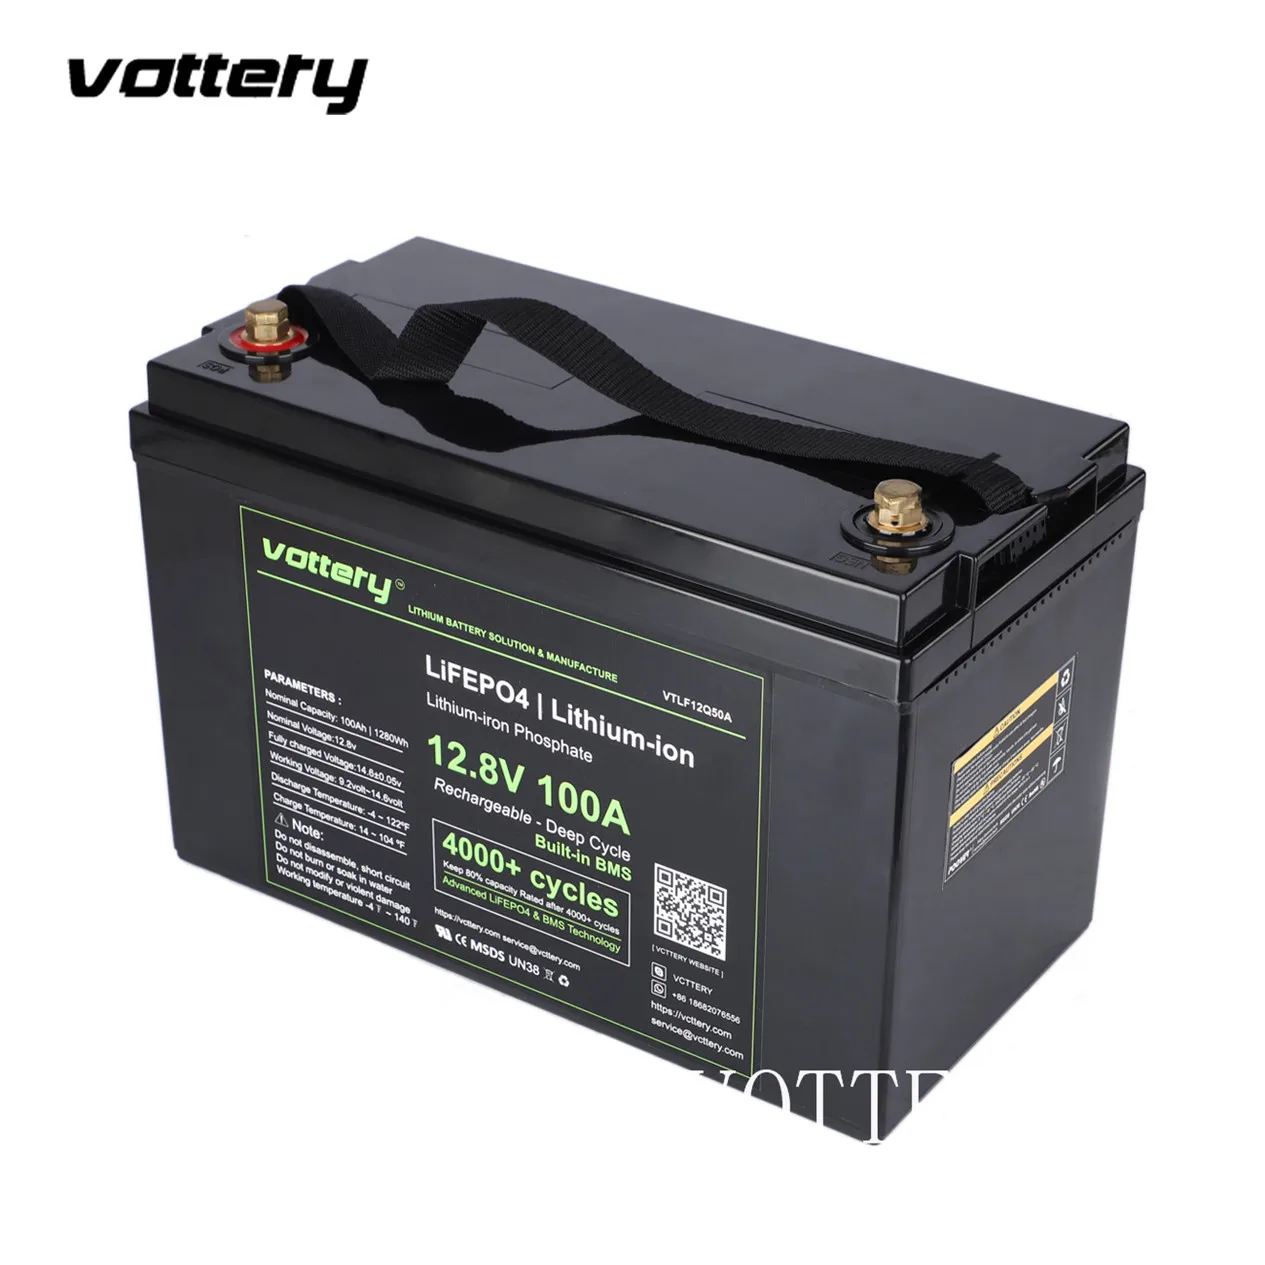 12v 105a Lithium Battery Aku Lifepo4 120ah Deep Cycle For Car Power Ion Lithium-batteries Waterproof Battery Rv Cart - 105a Lithium Battery,12v 105a,12v 105a Aku Product on Alibaba.com